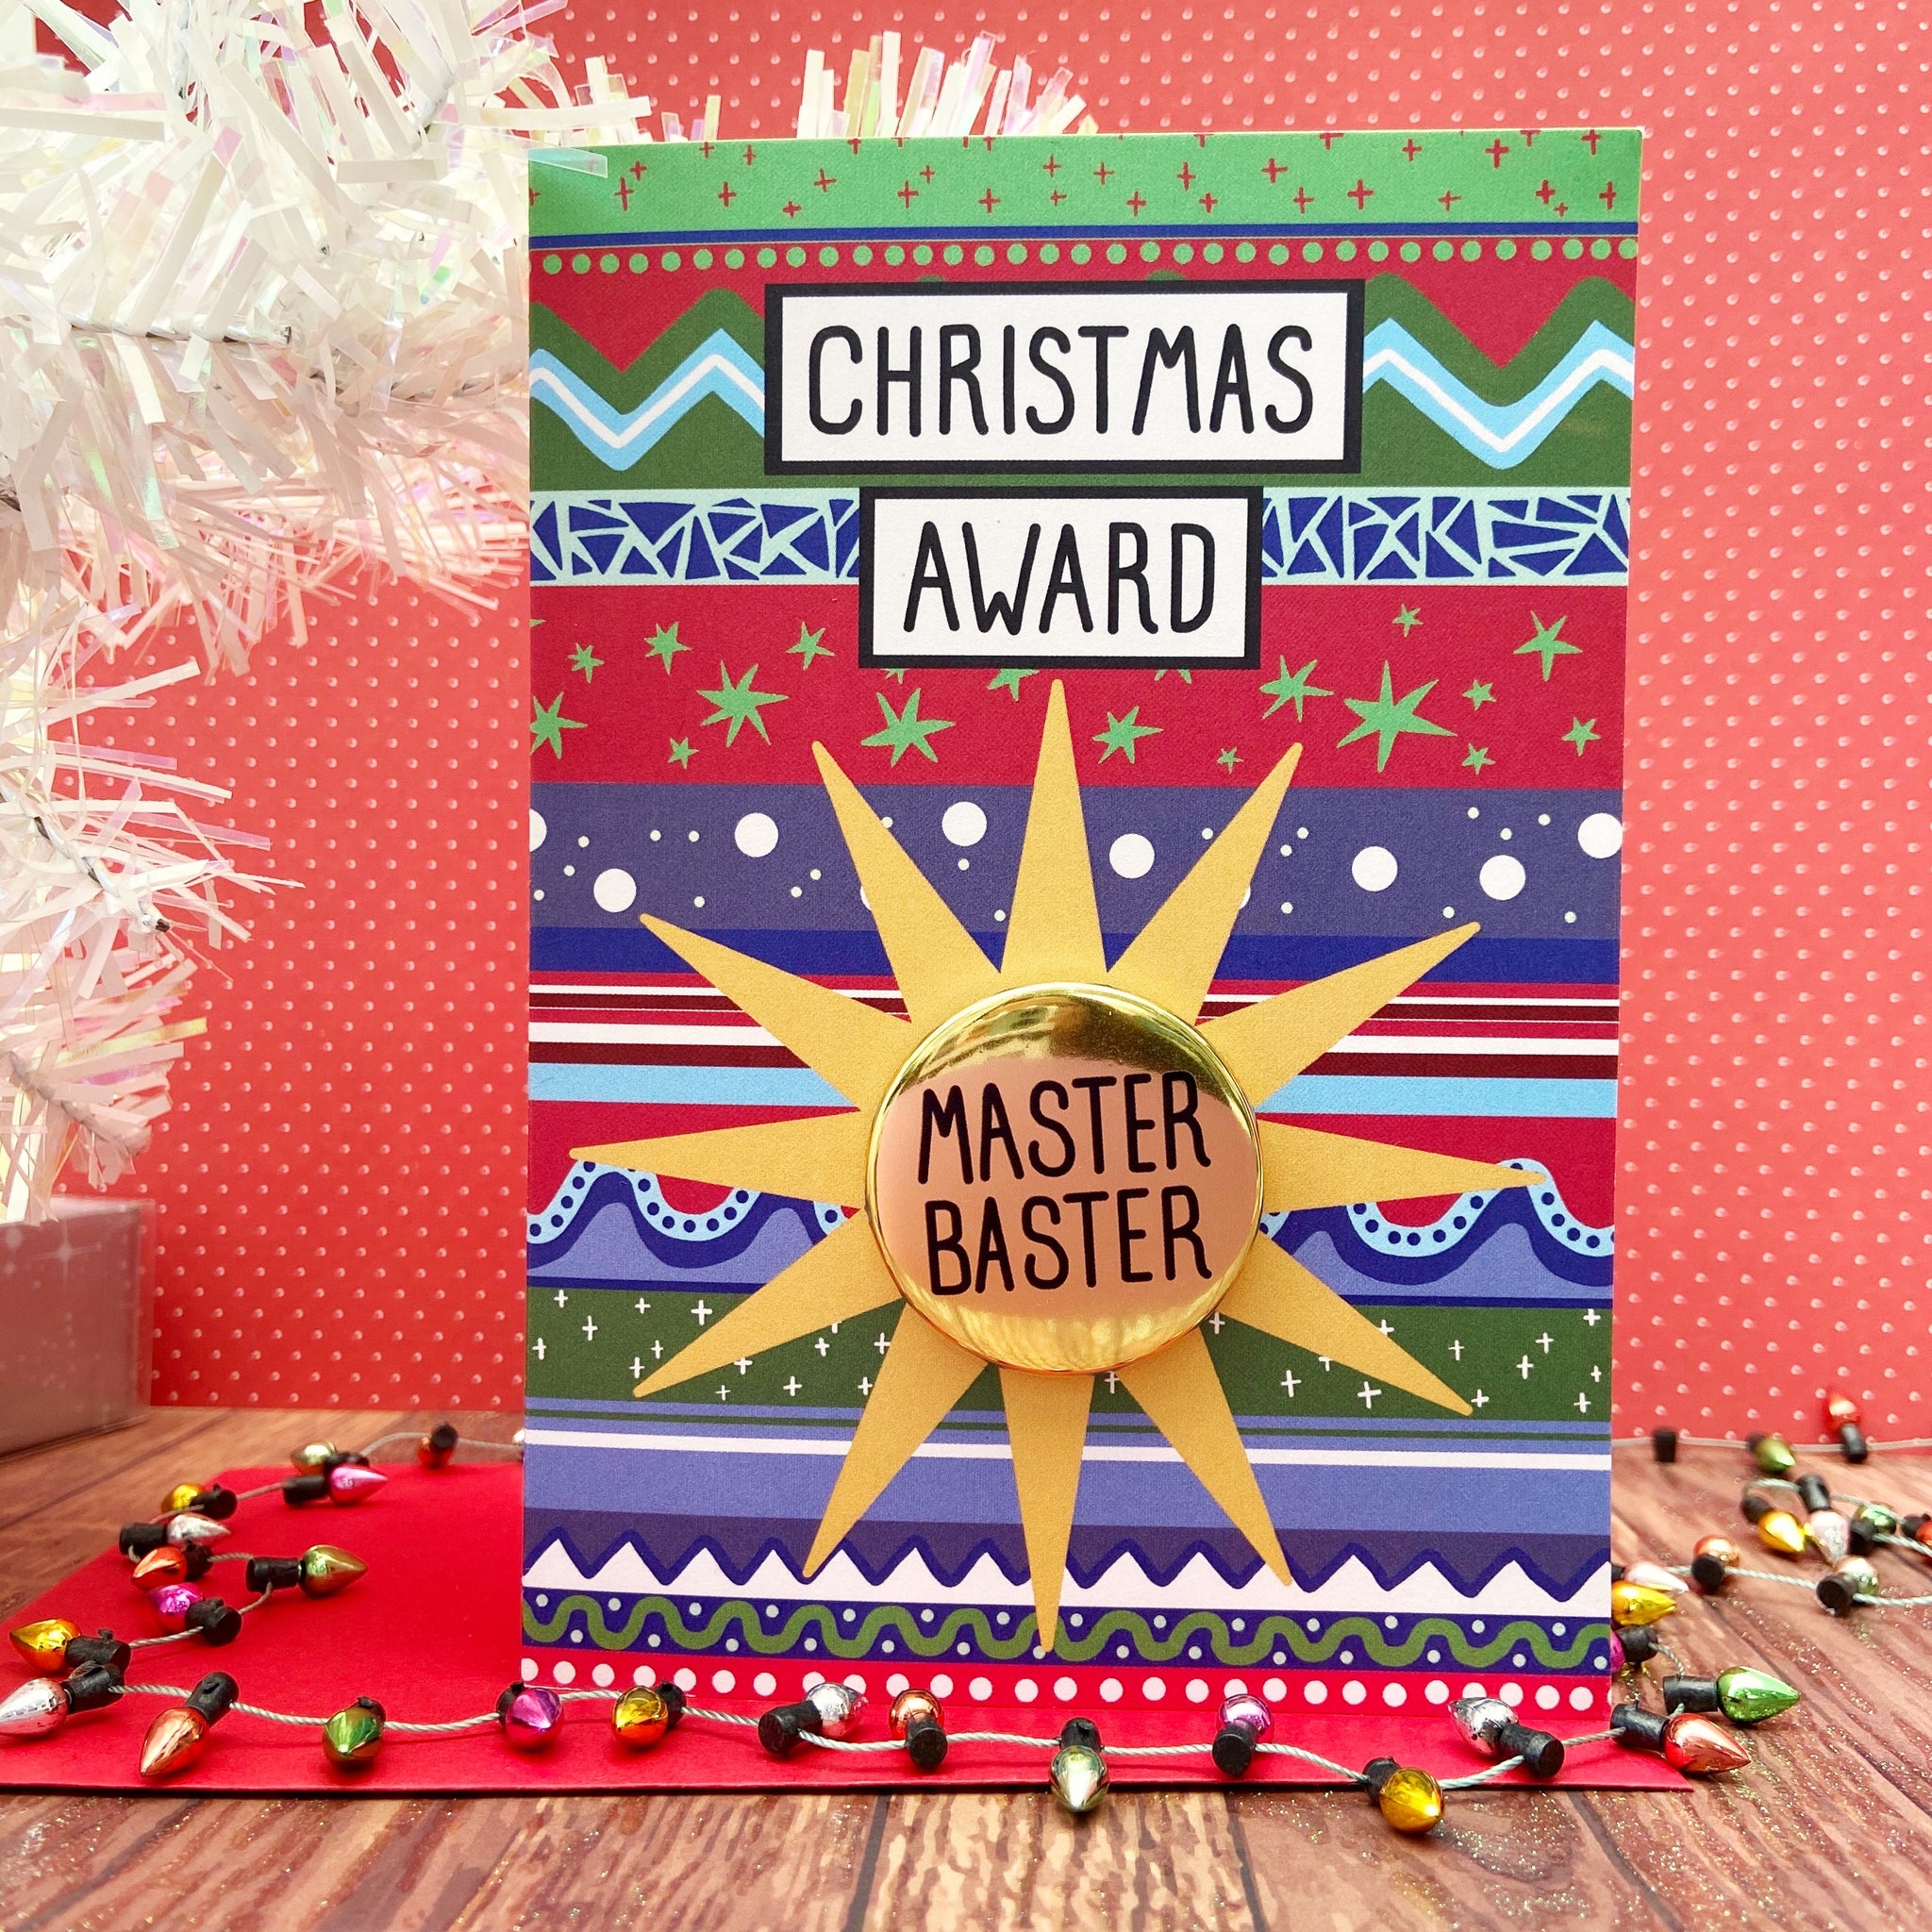 SALE Master Baster - Christmas Awards Card